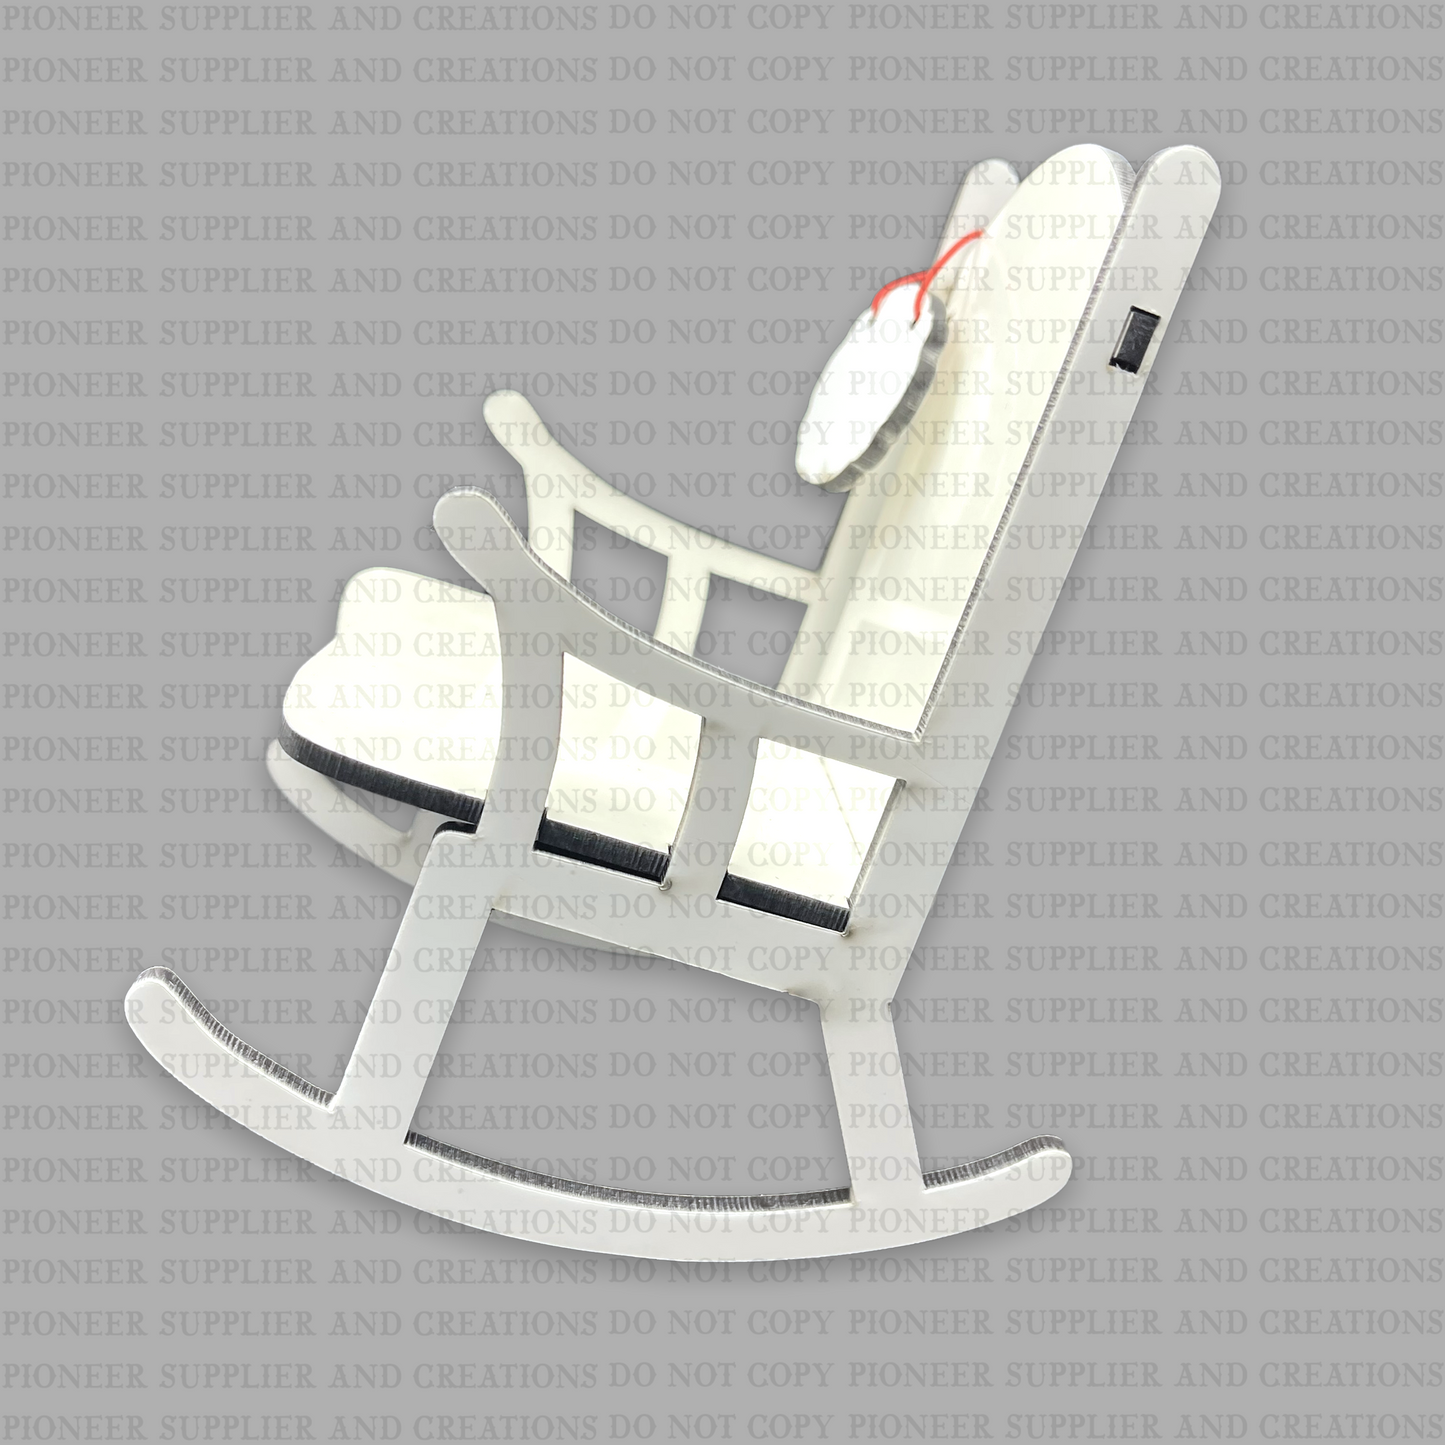 Large Desktop Rocking Chair Sublimation Blank